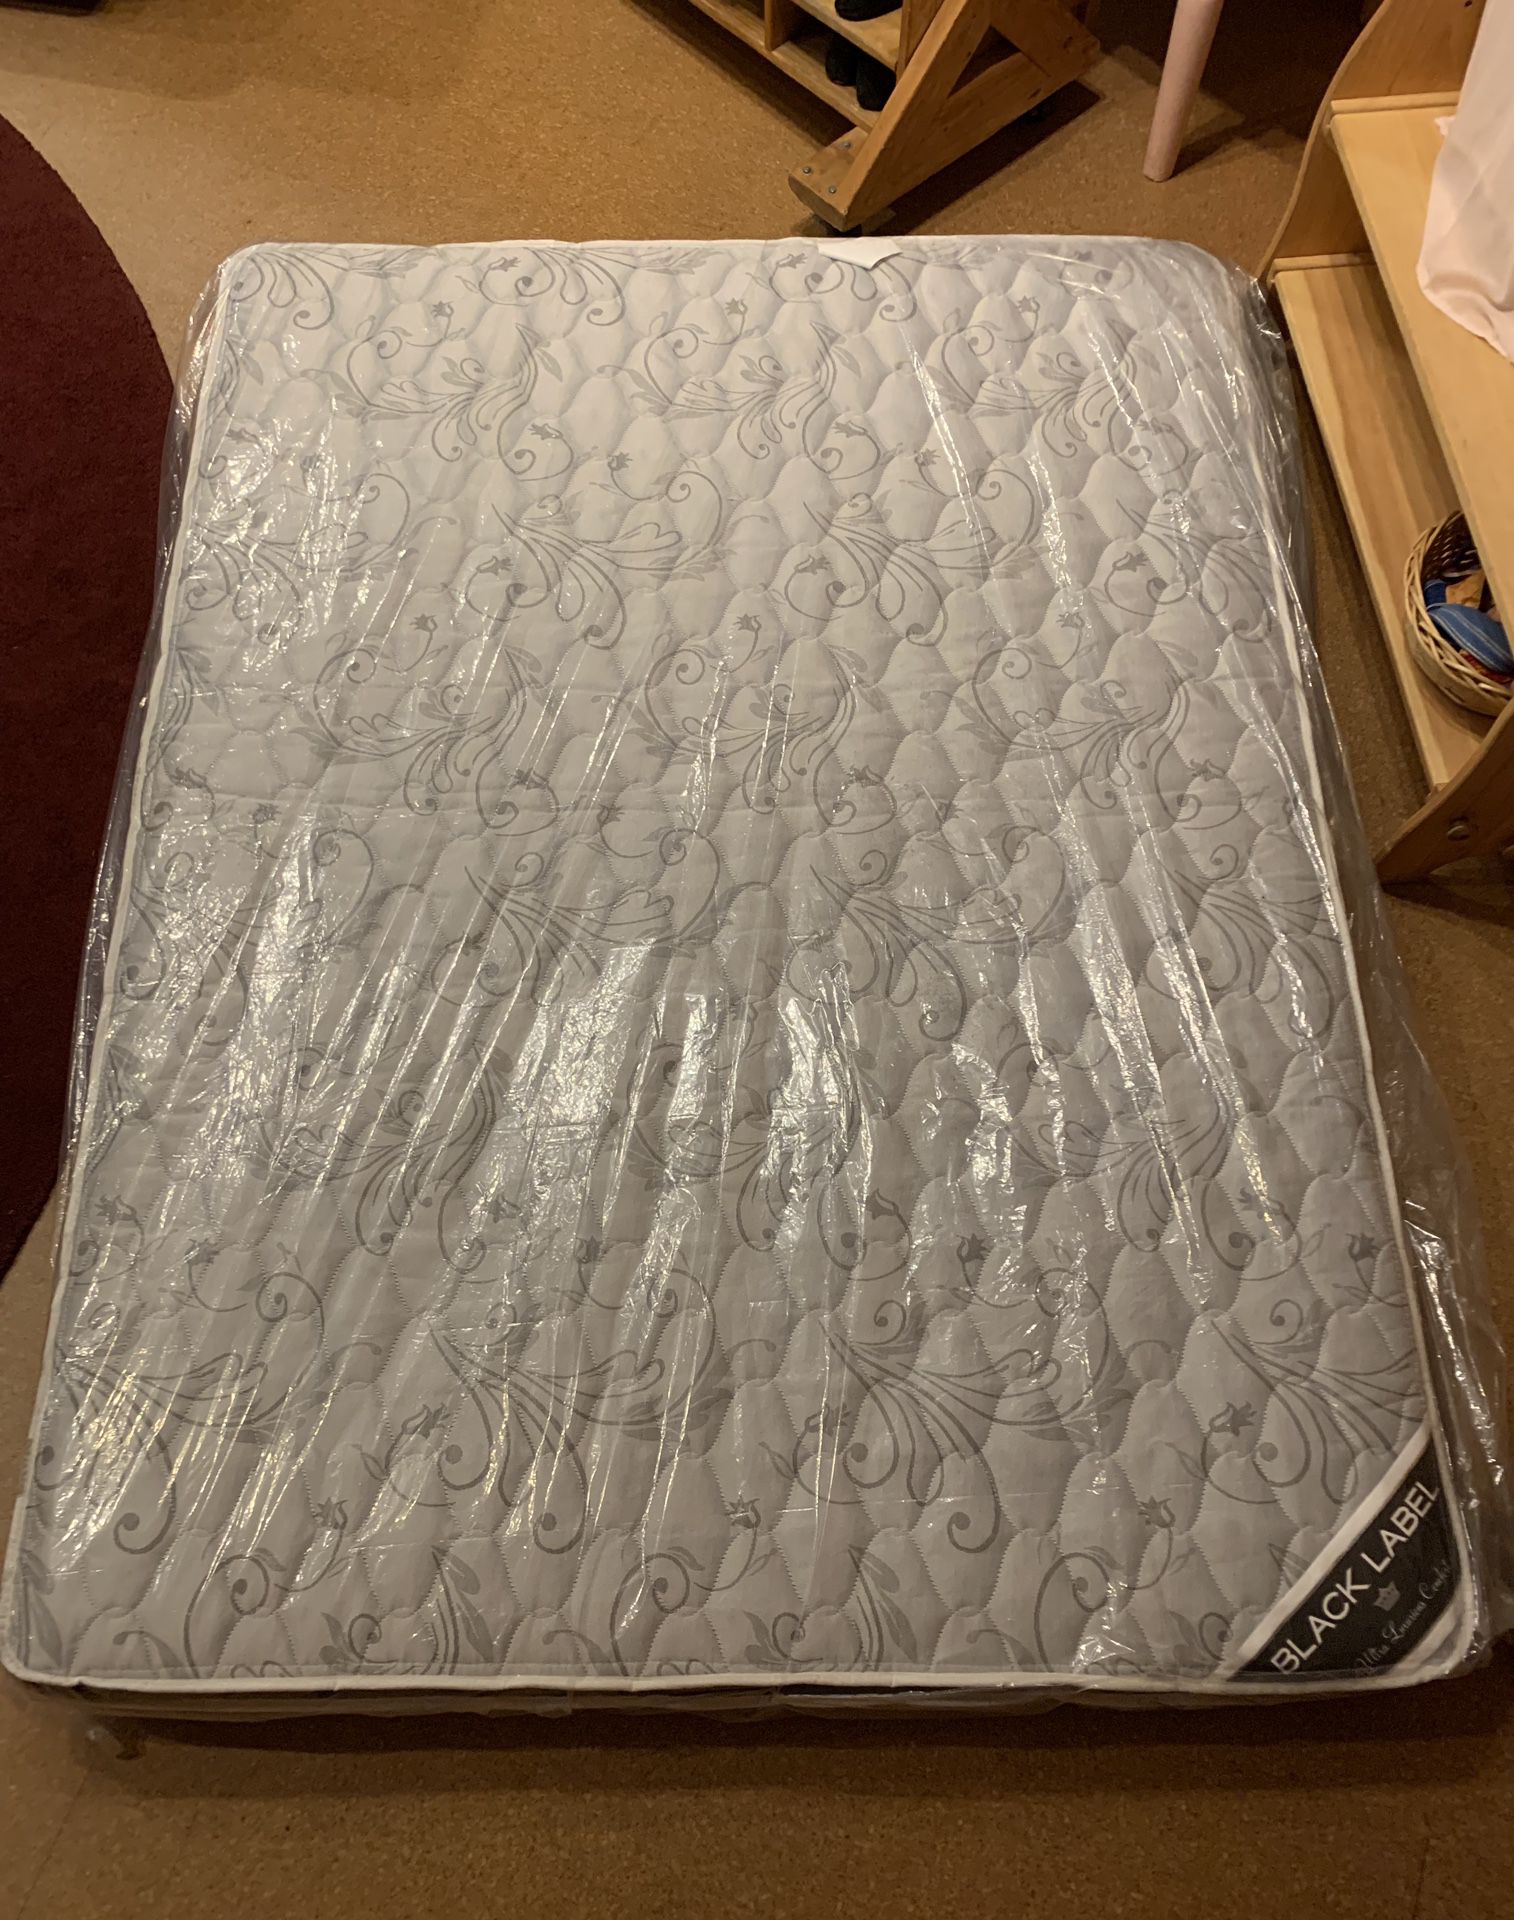 Brand new RV mattress